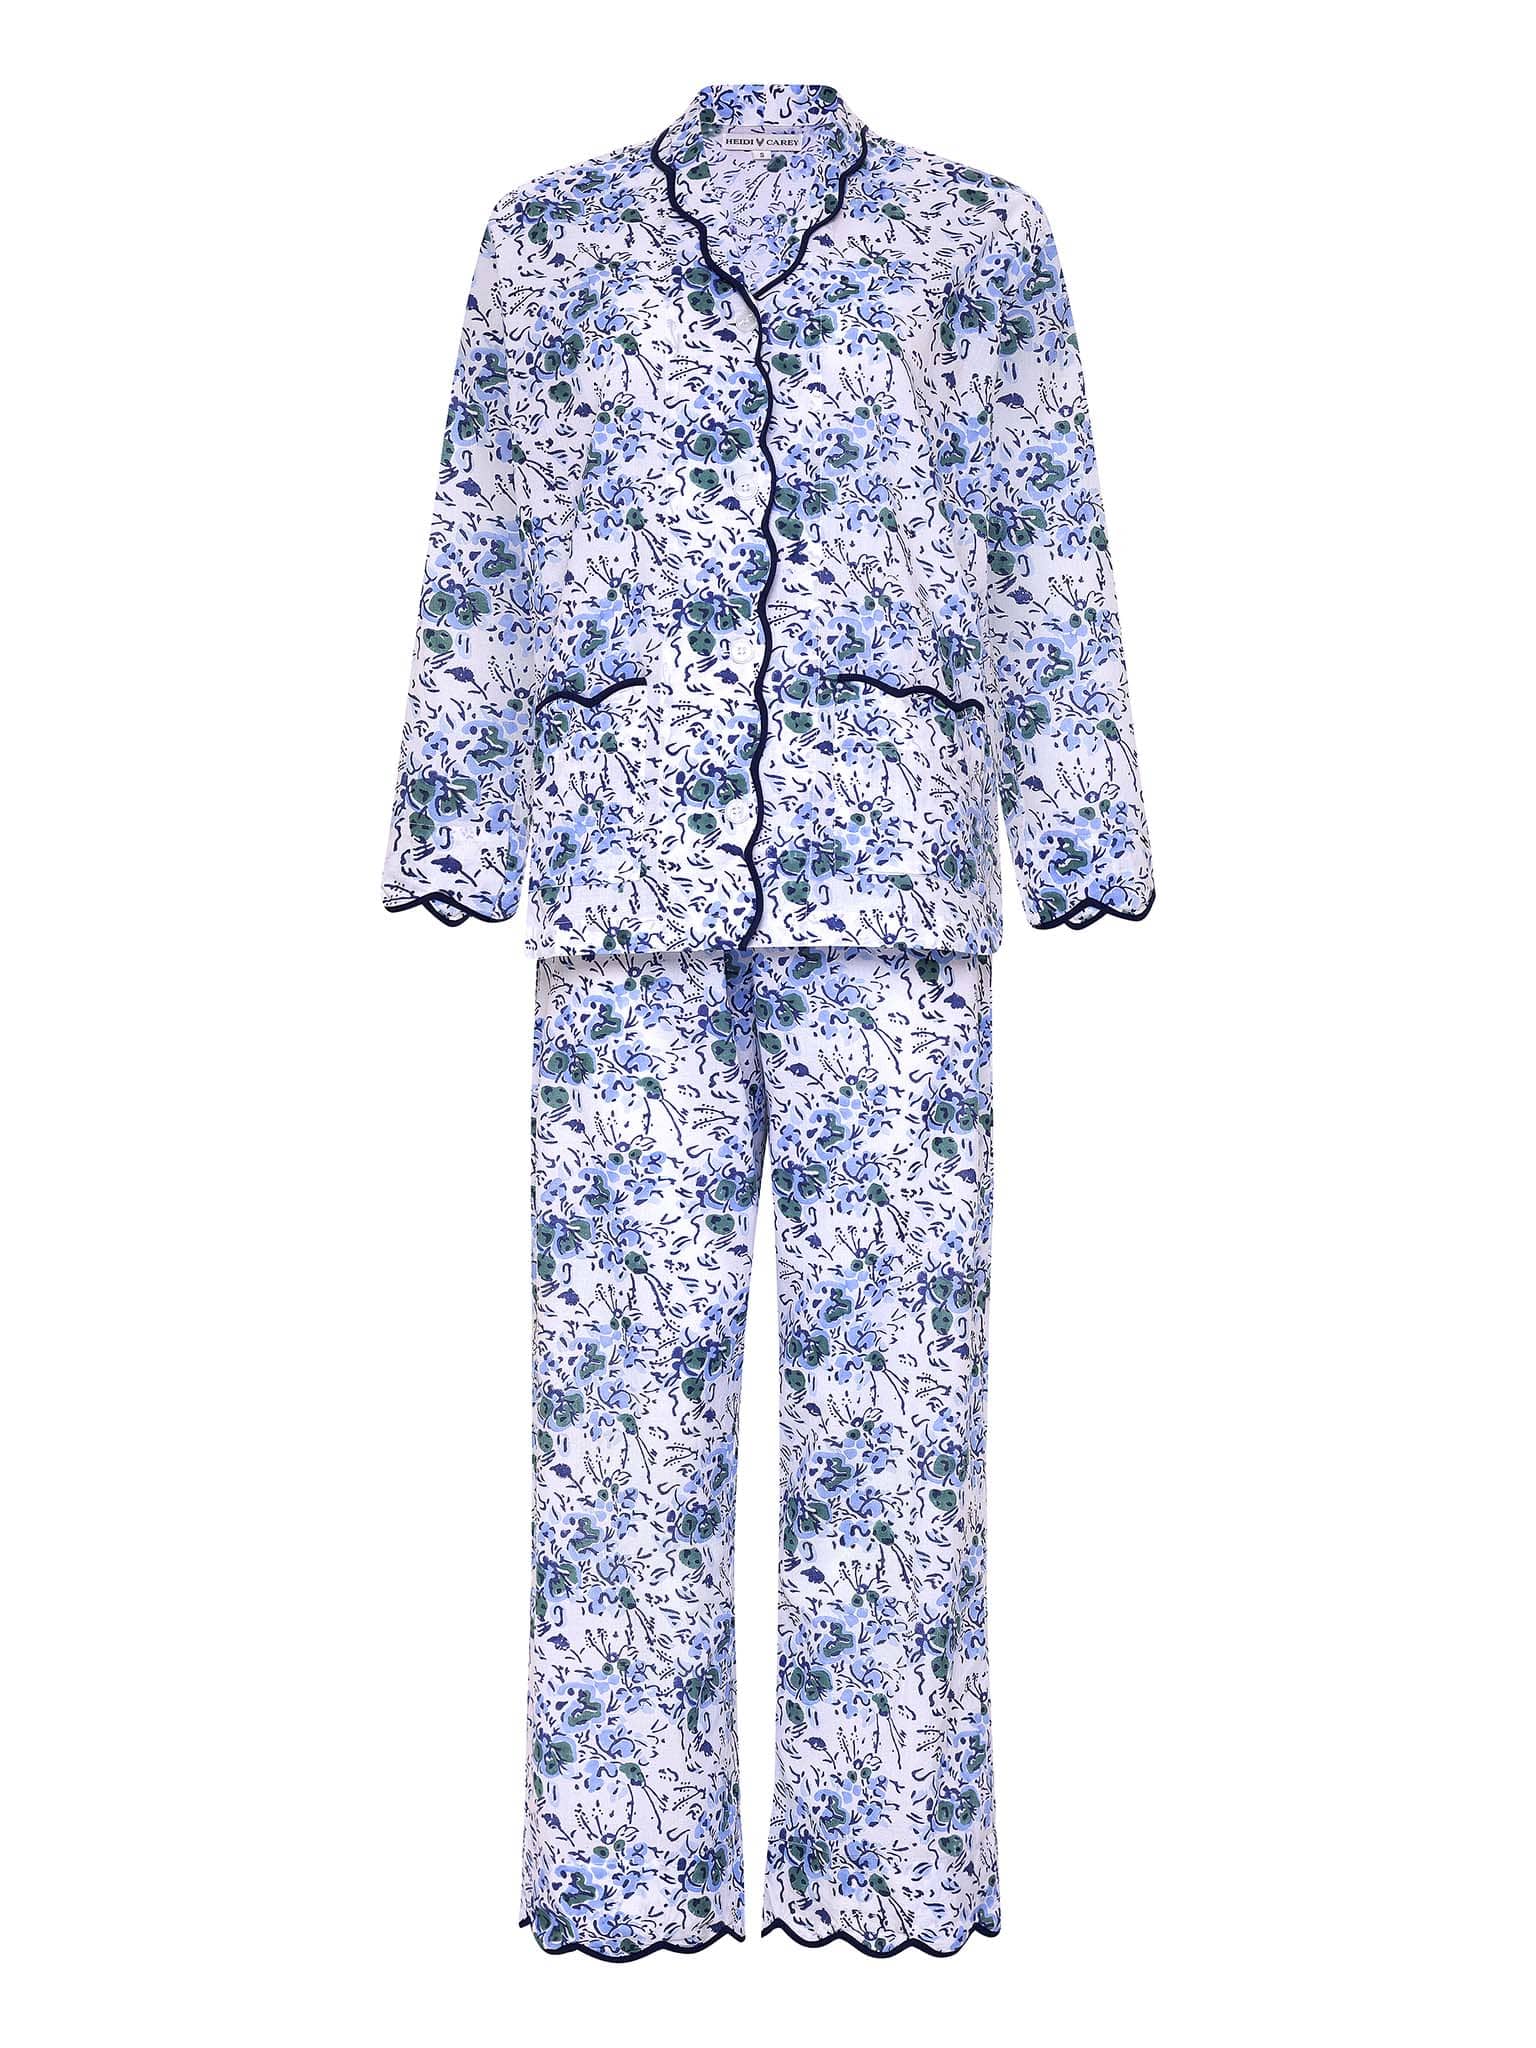 Floral Print 100% Cotton Sleepwear Pajama Set Night Suit Pj Set